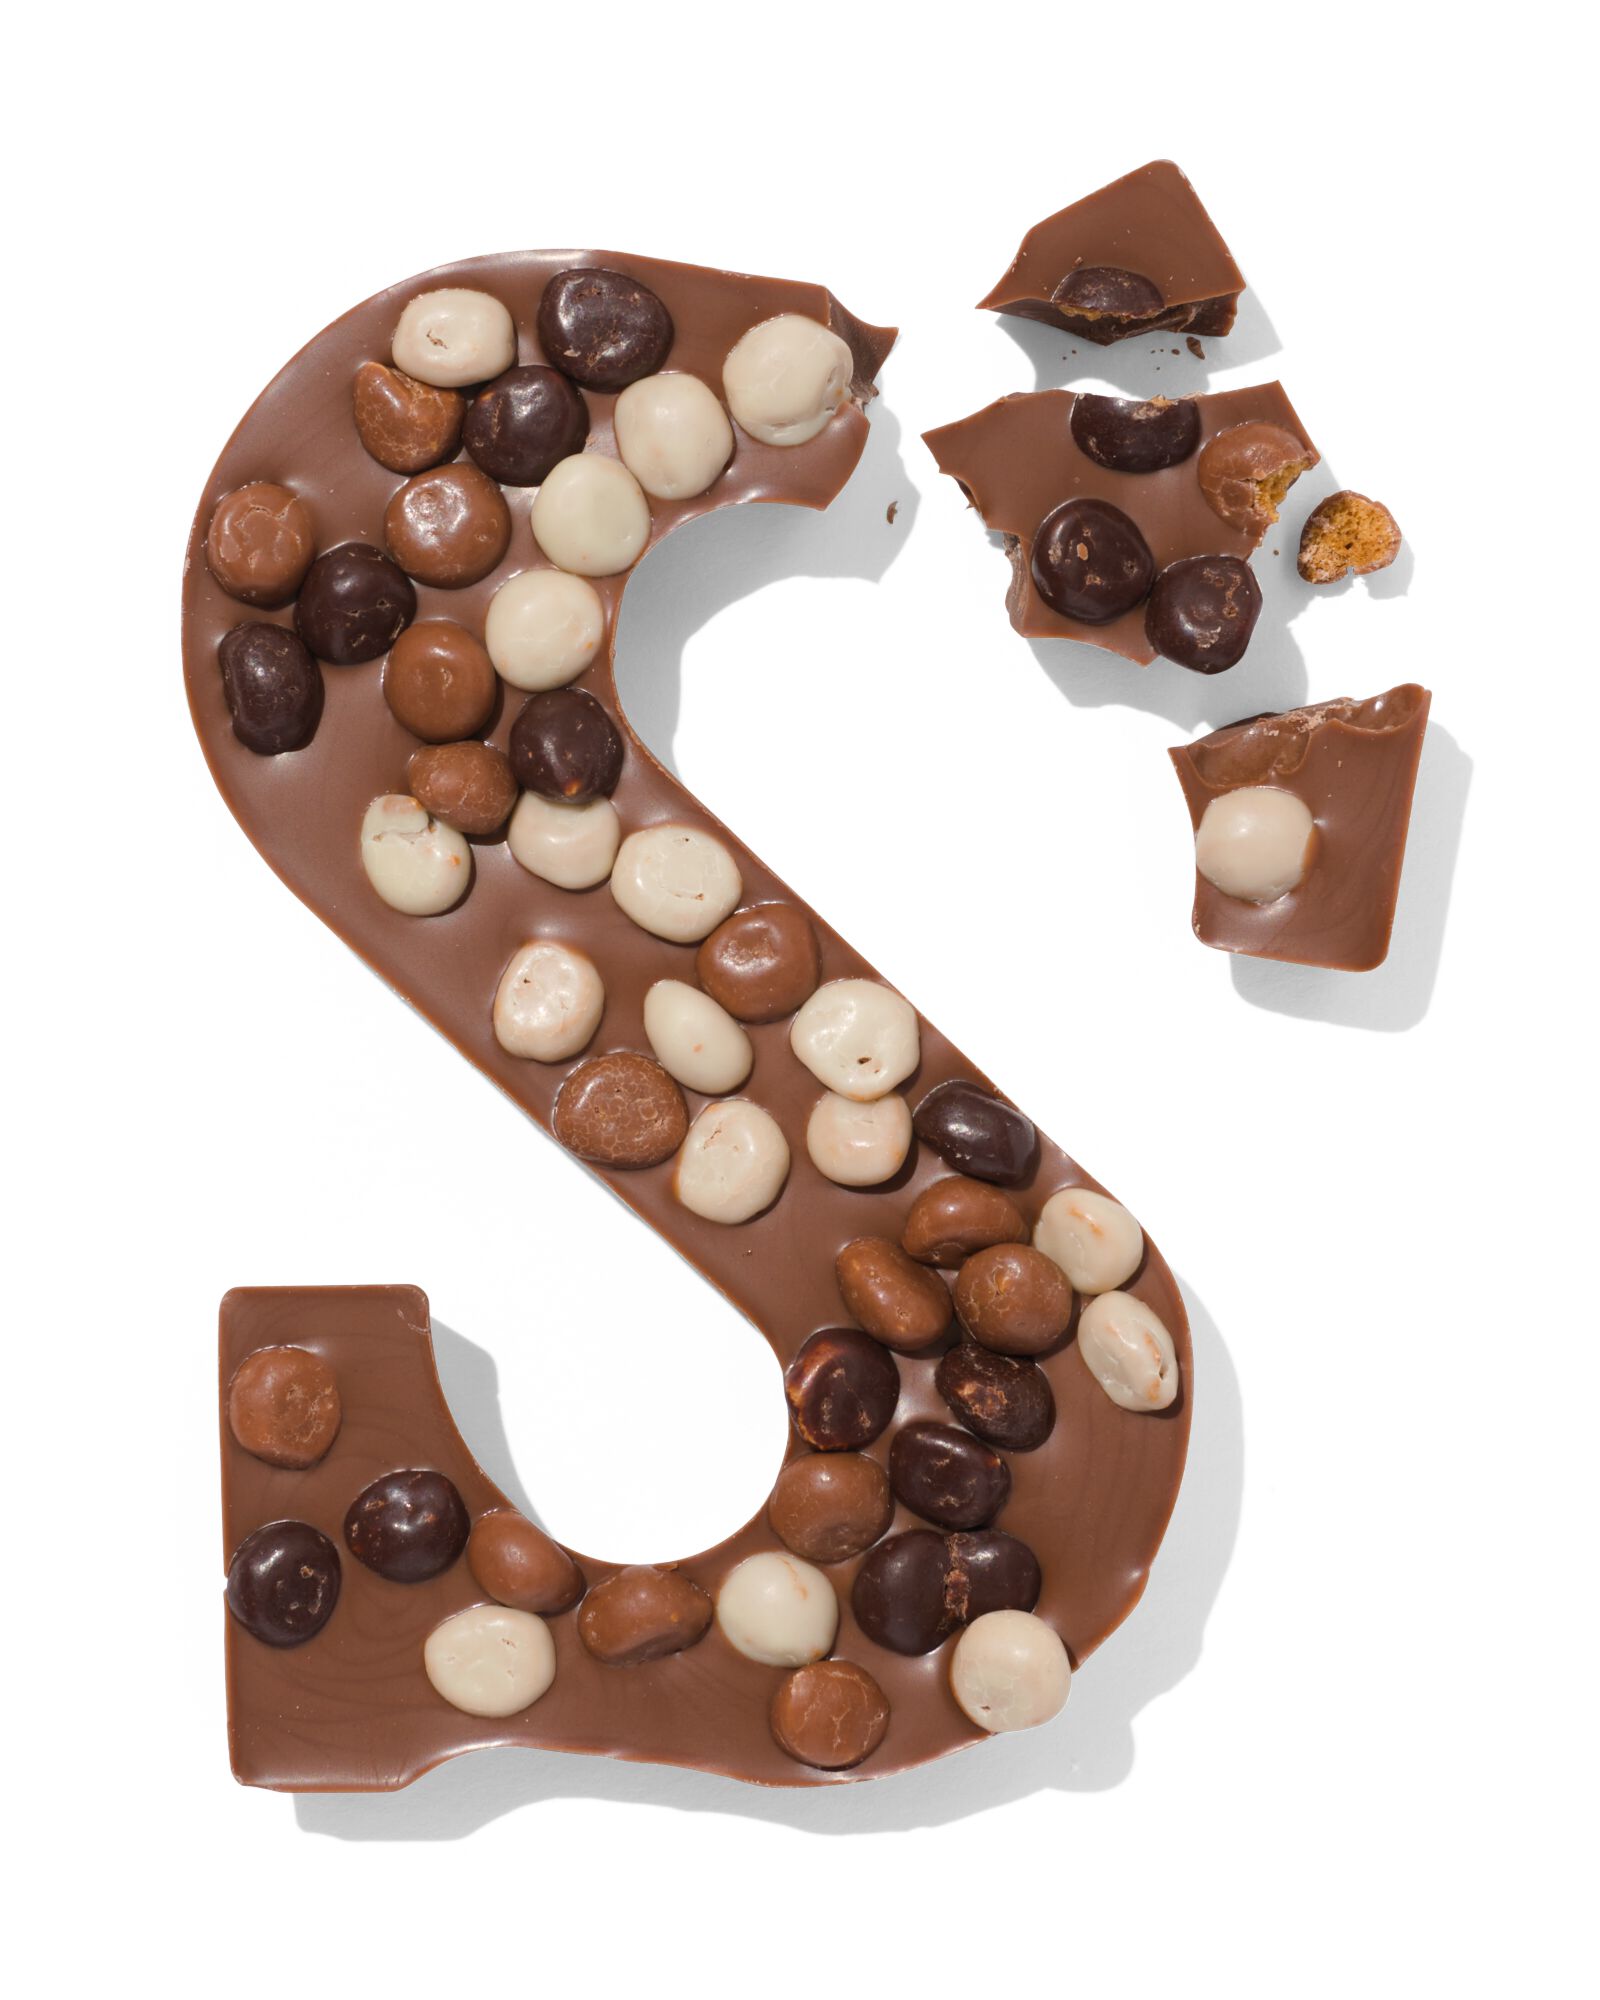 handgedecoreerde chocoladeletter melk S choco kruidnootjes 135gram - 24428319 - HEMA